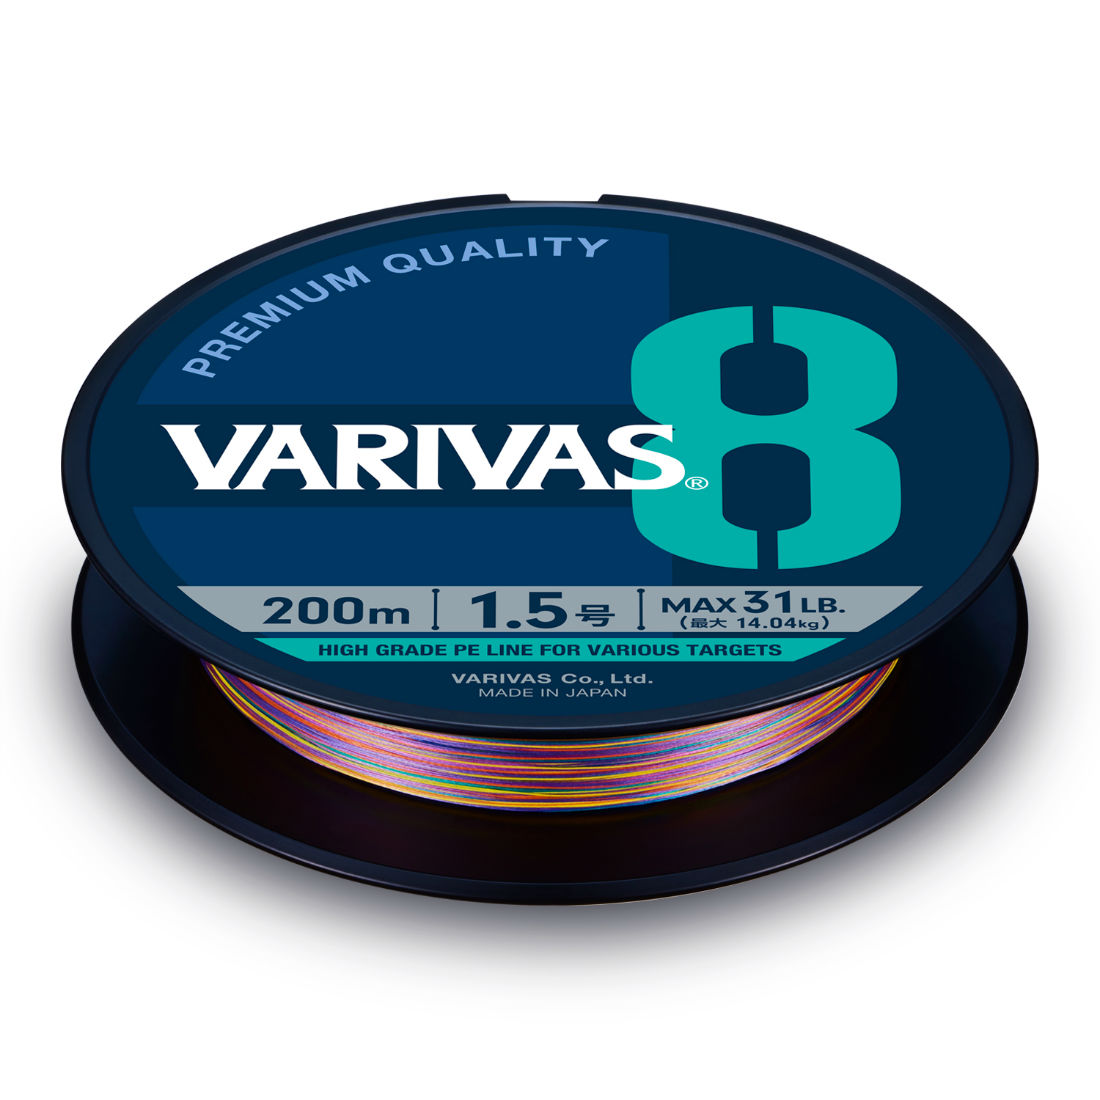 FIR VARIVAS PE 8 MARKING EDITION 150m 0.185mm 23lb Vivid 5 Color